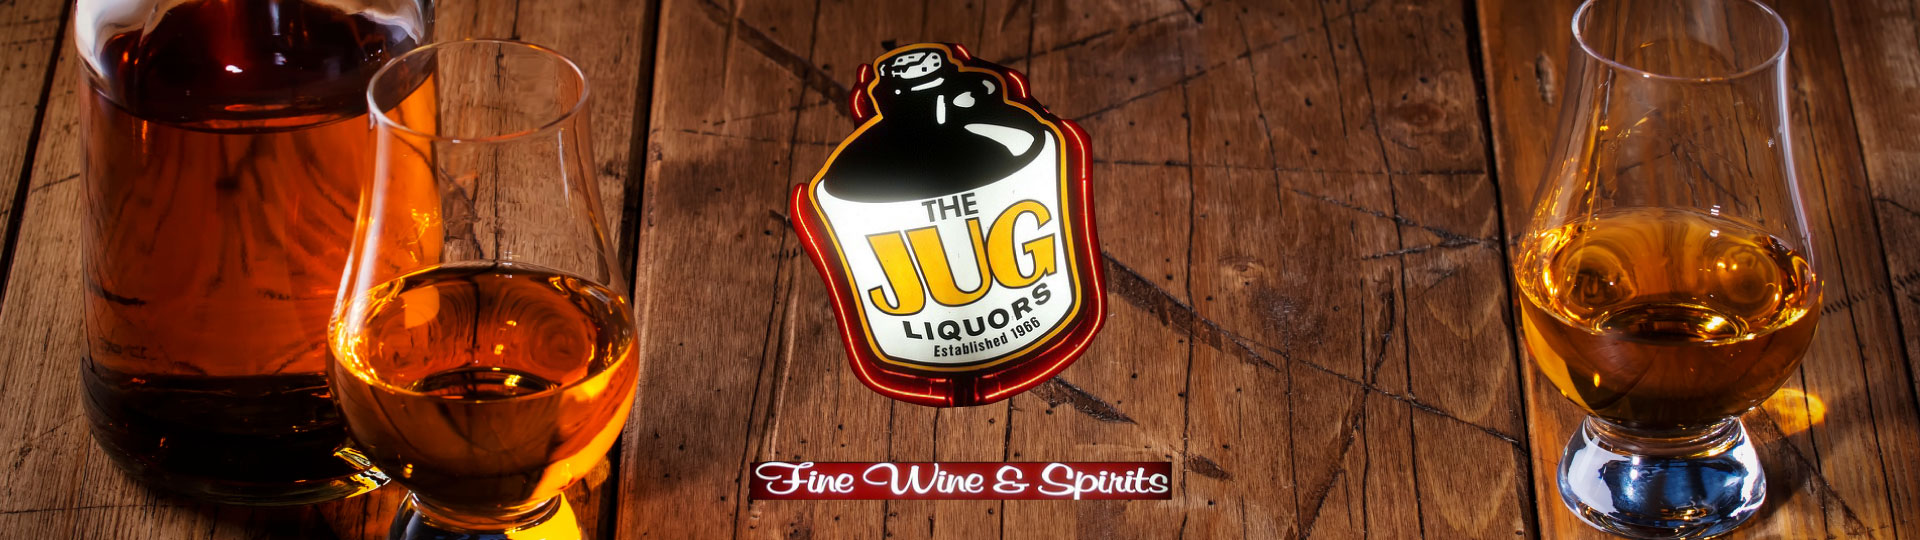 The Jug Liquors